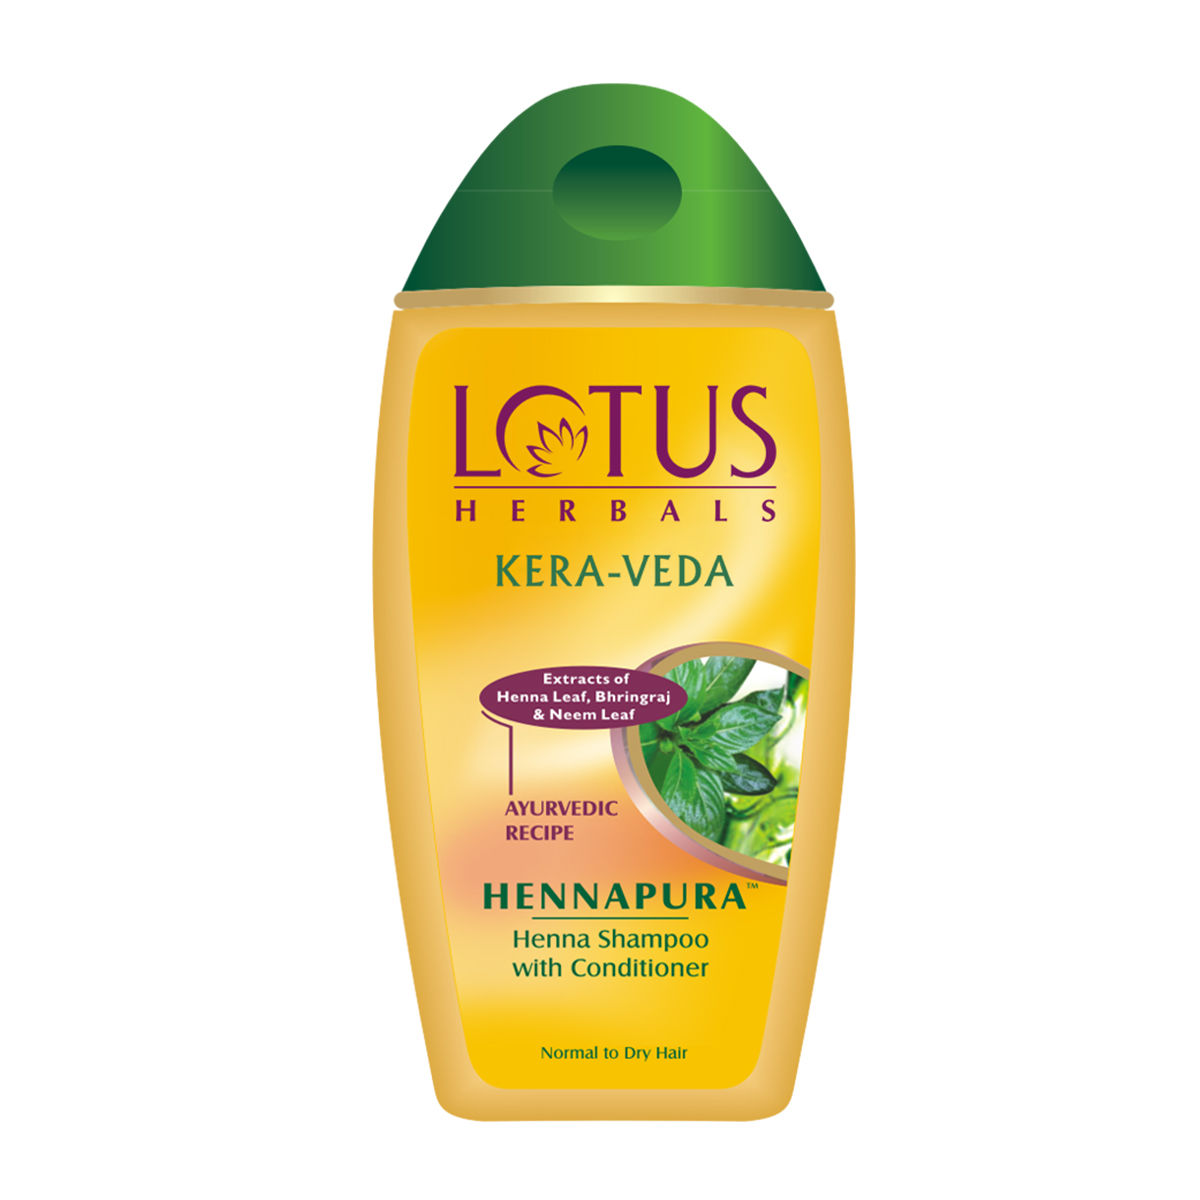 Lotus Herbals Kera-veda Hennapura Henna Shampoo with Conditioner